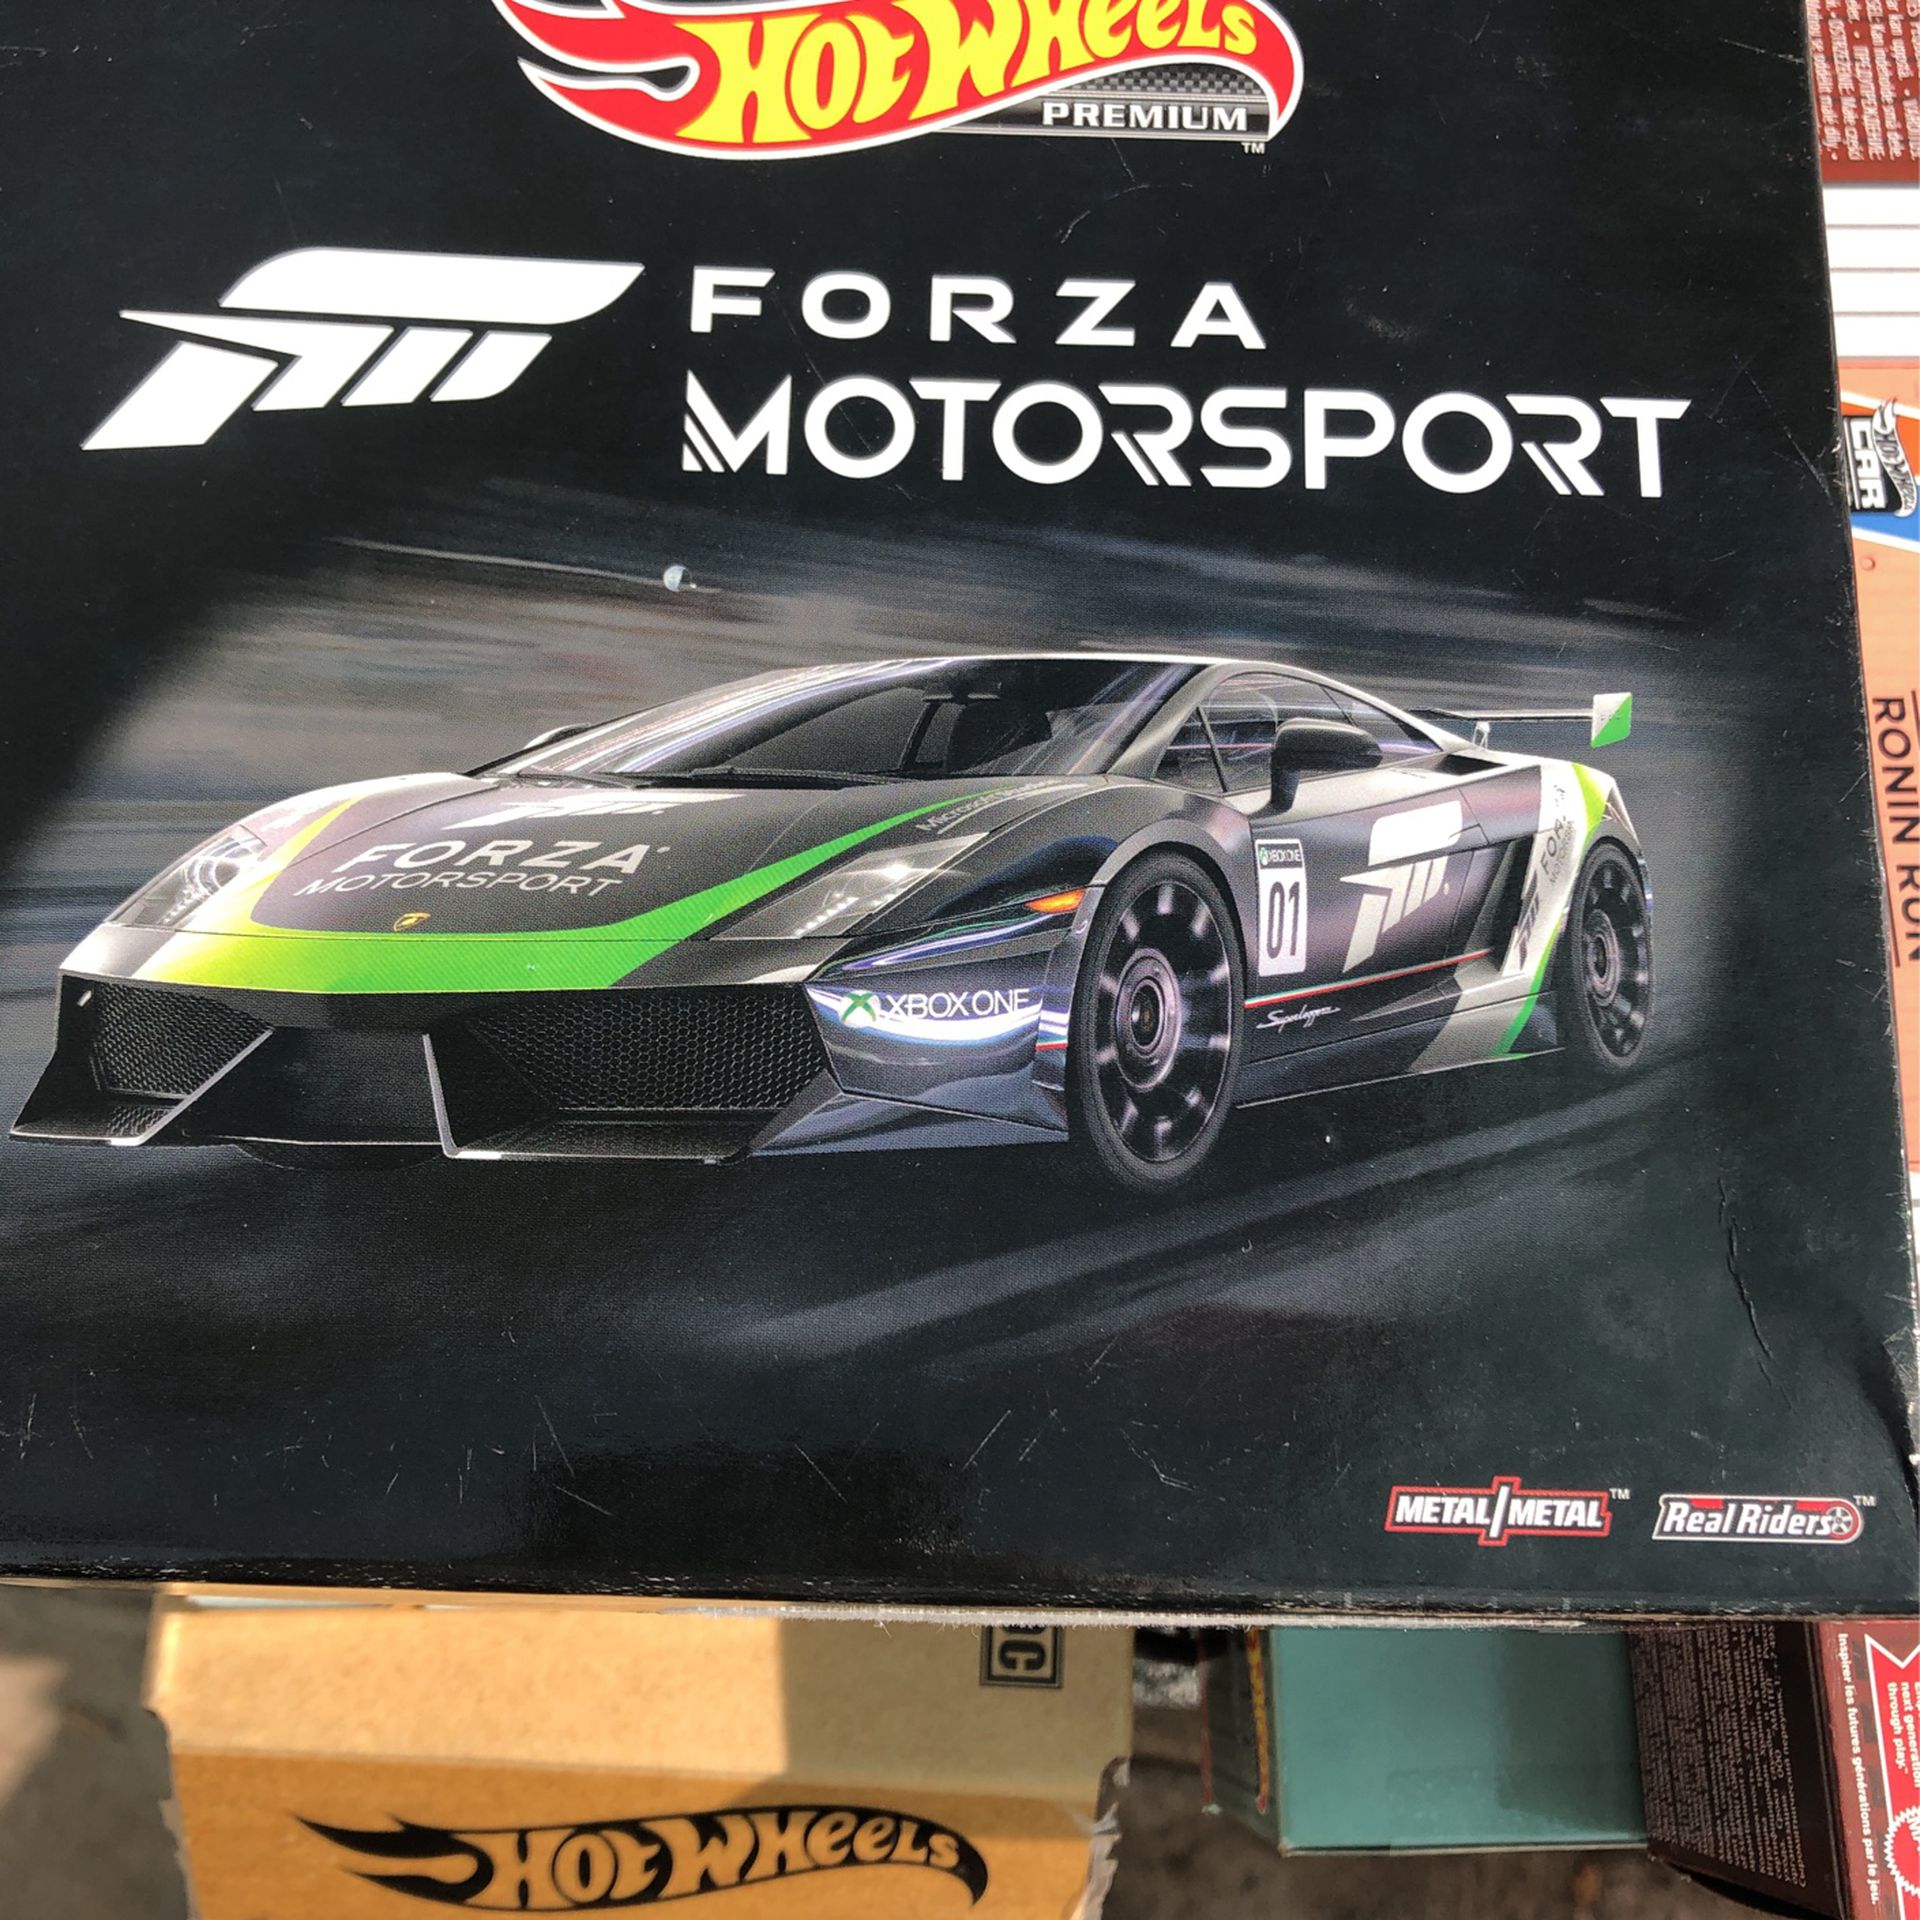 Forza Motorsport - Hot Wheels